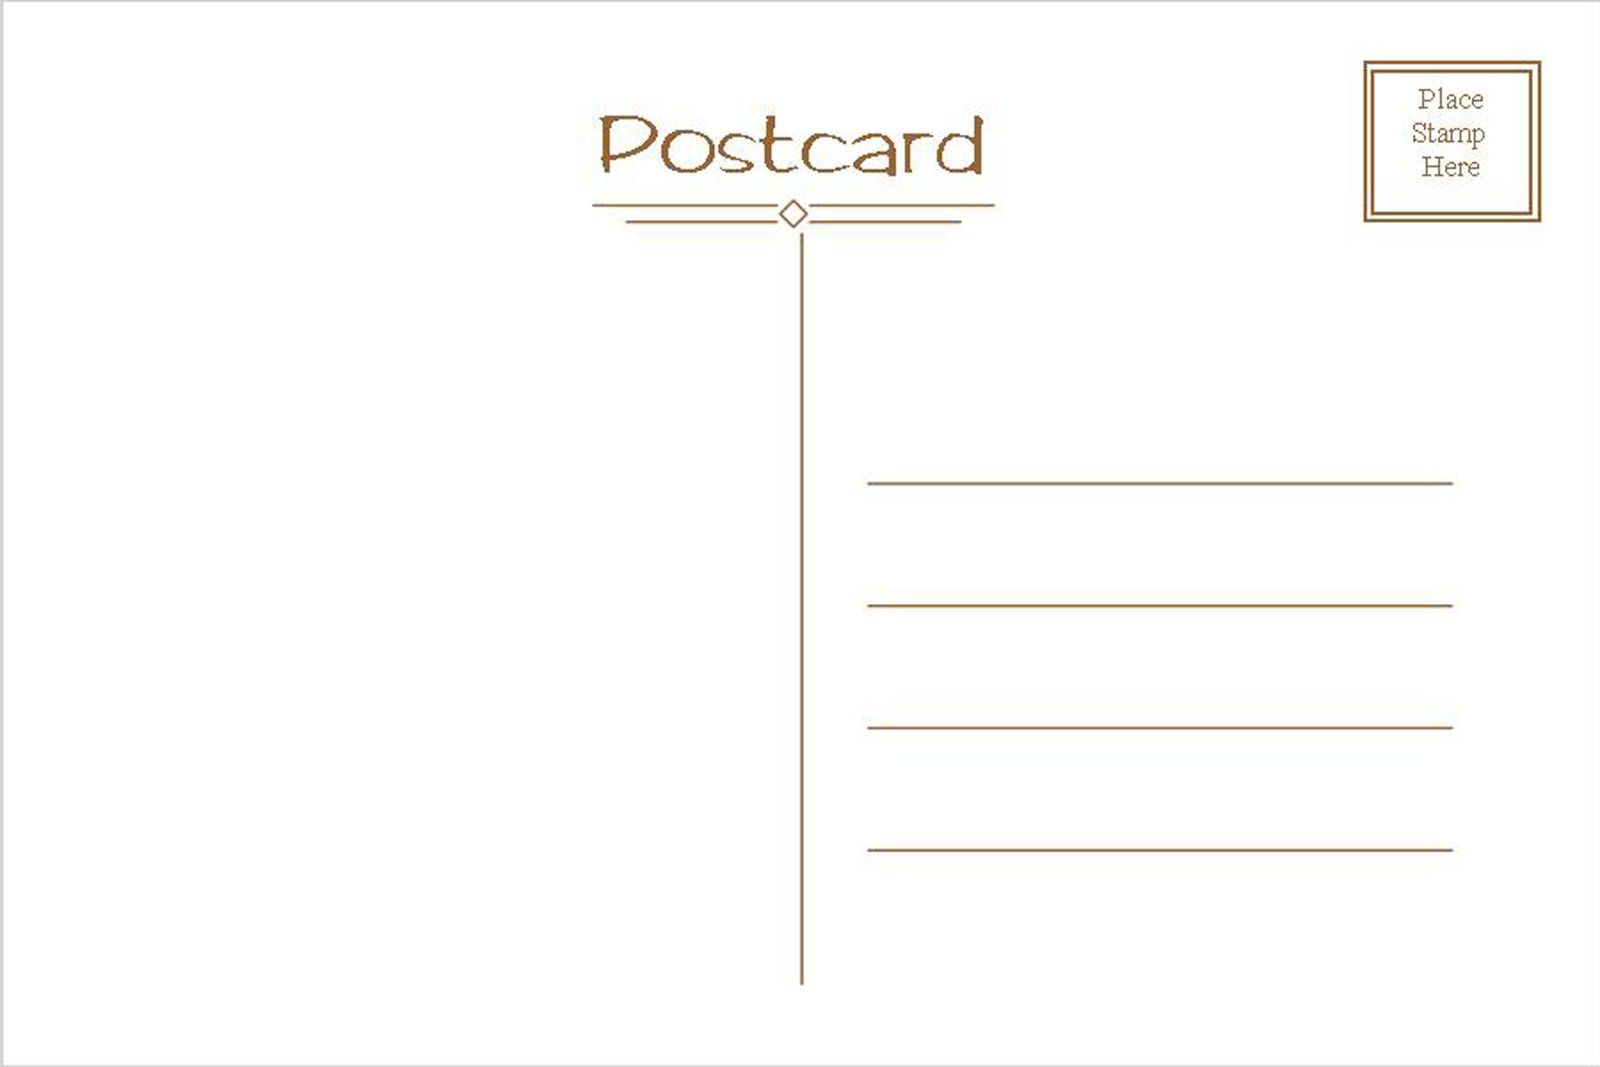 Postcard to print